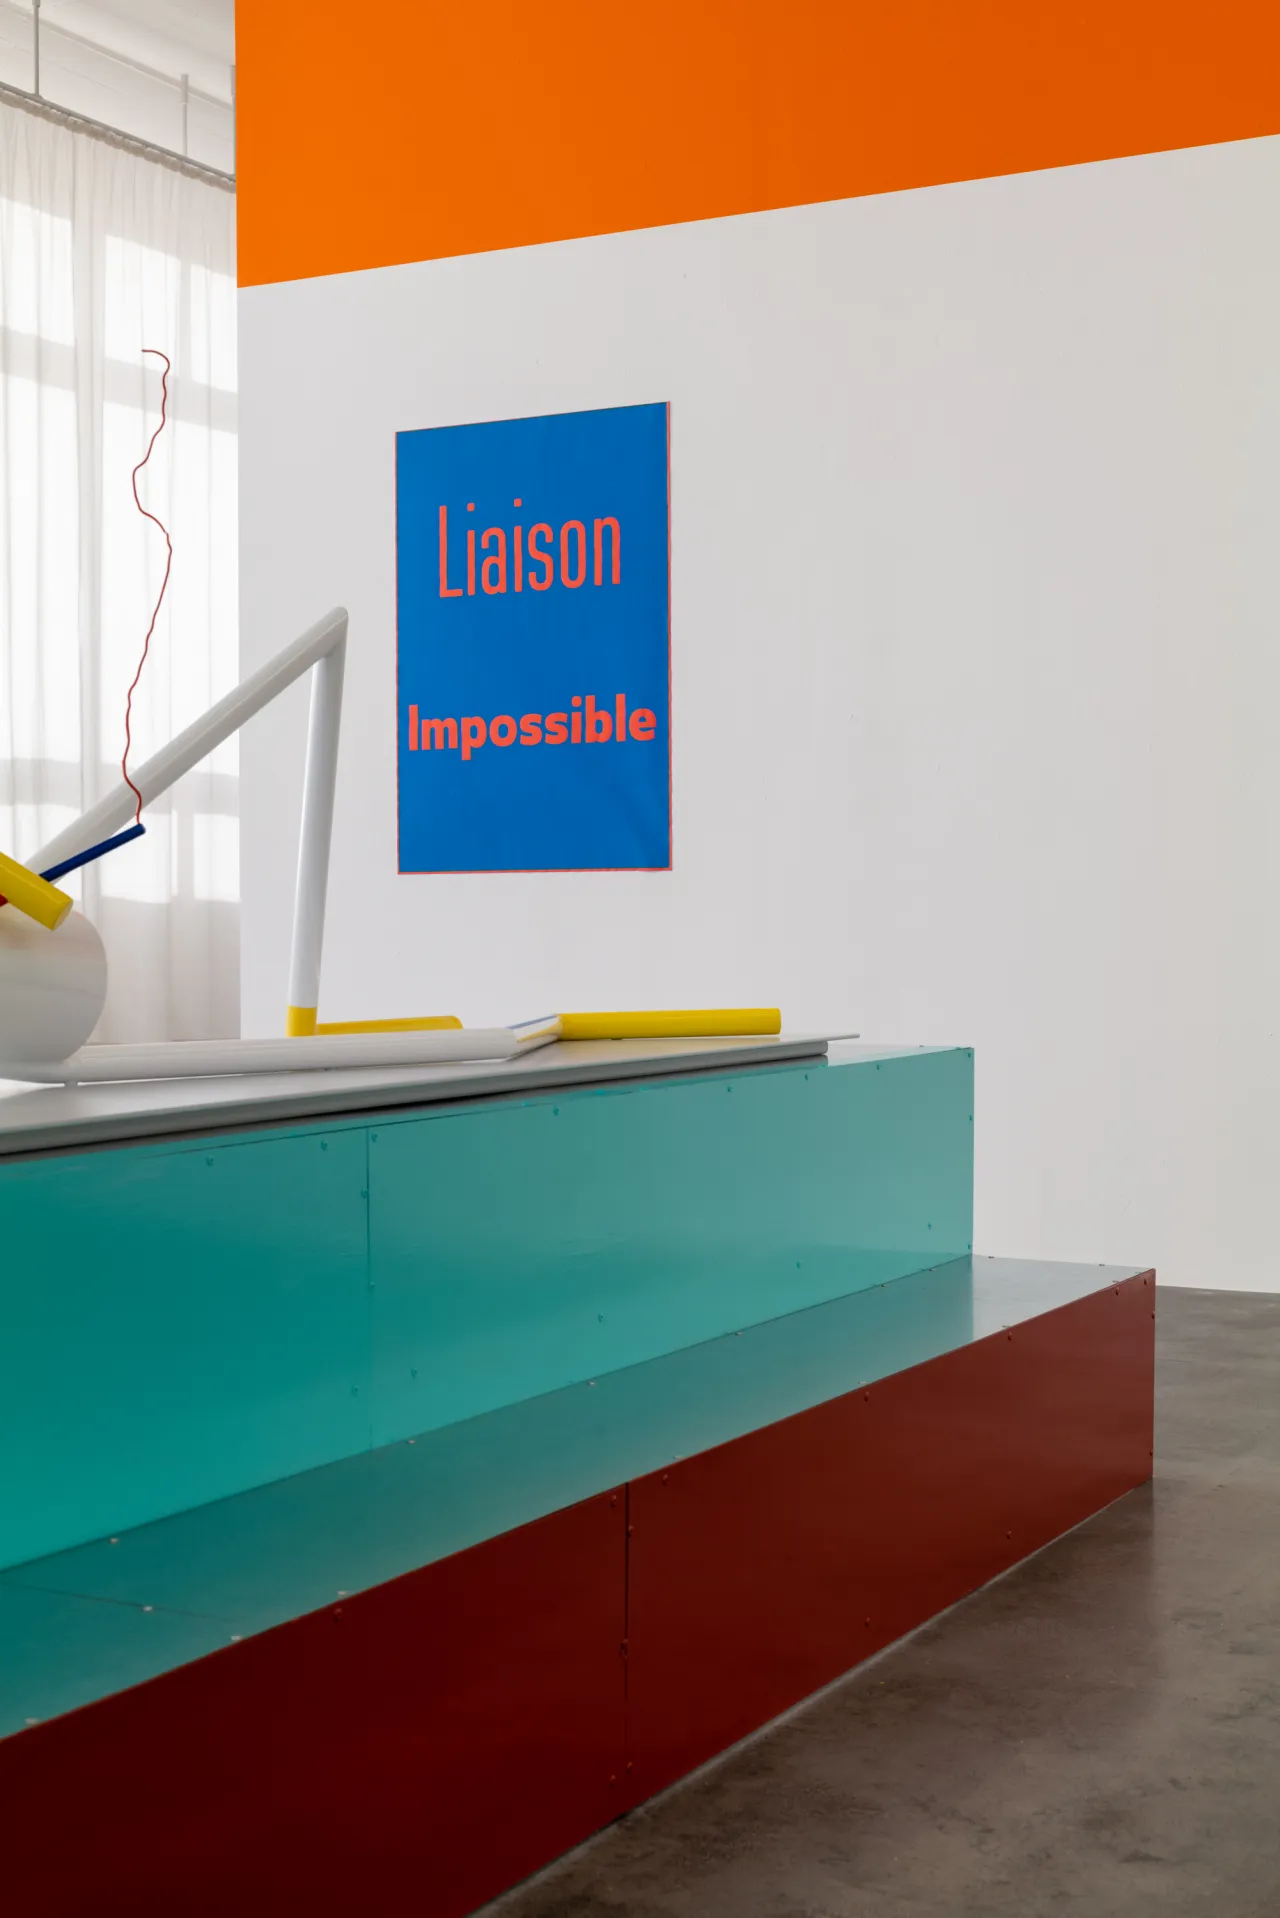 Wilhelm Klotzek, <em>Liaison impossible</em>, 2019, screen print on paper, 70 x 100 cm.